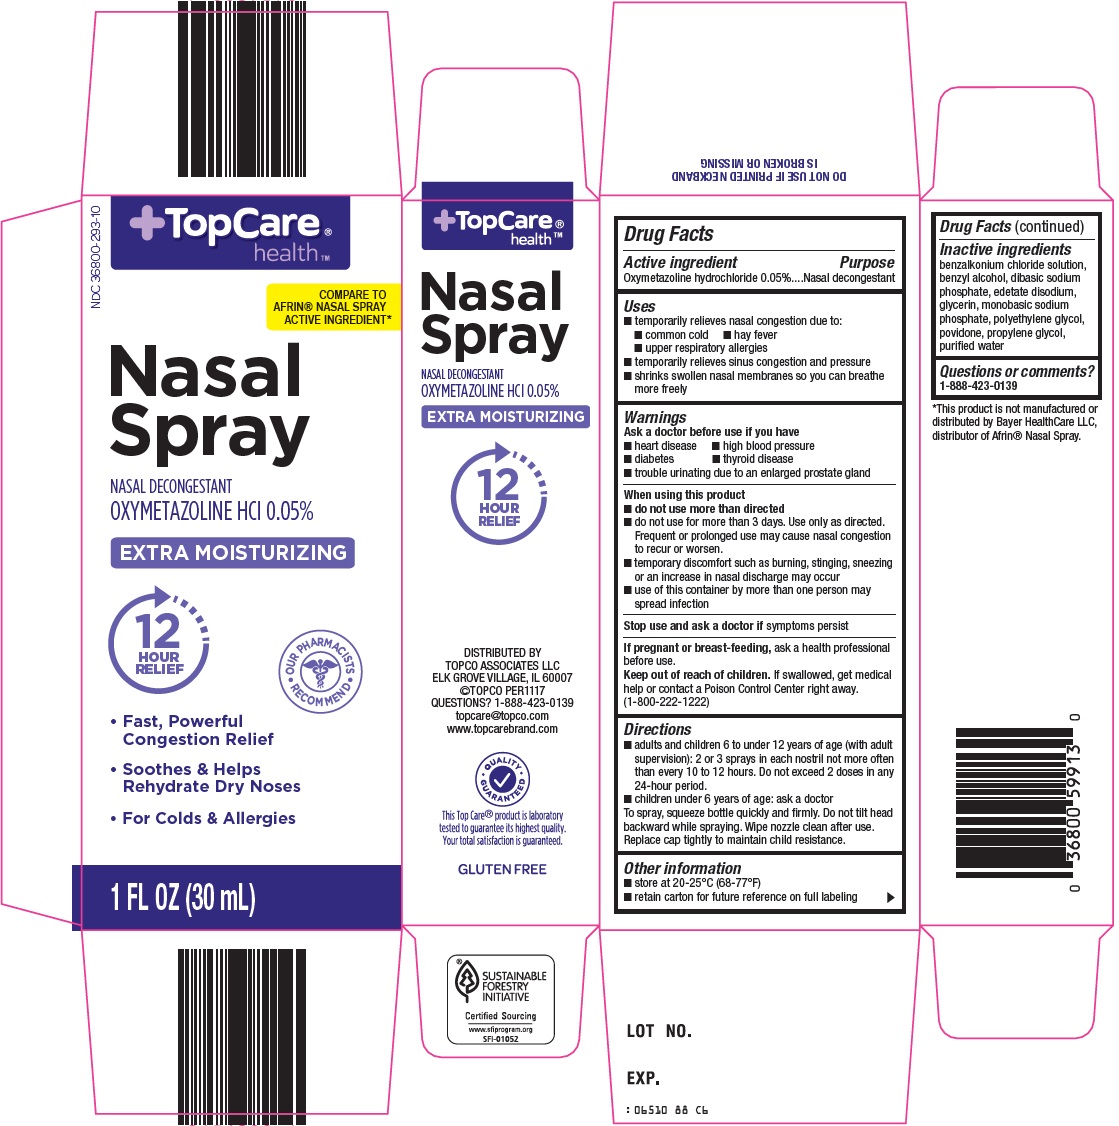 nasal-spray-image